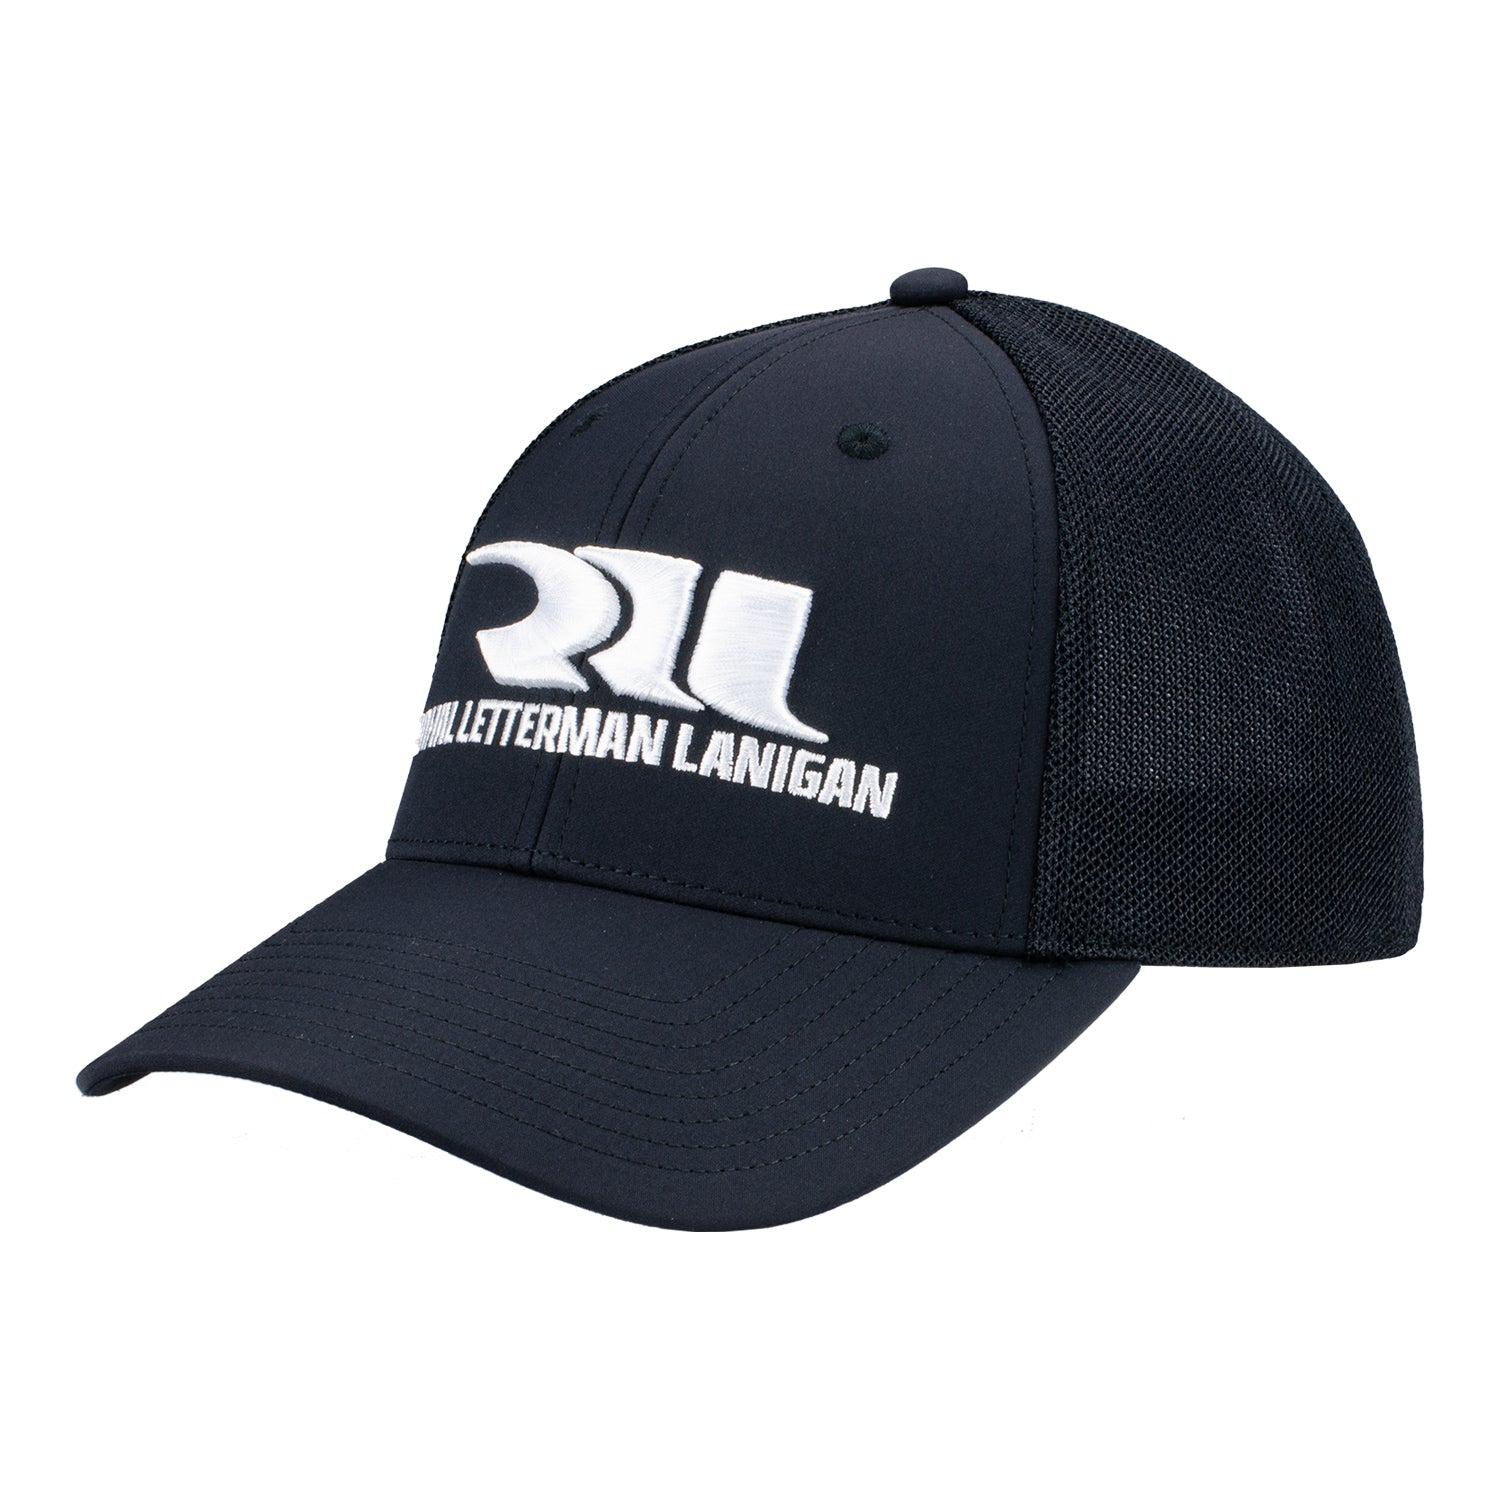 Rahal Letterman Lanigan Team Hat